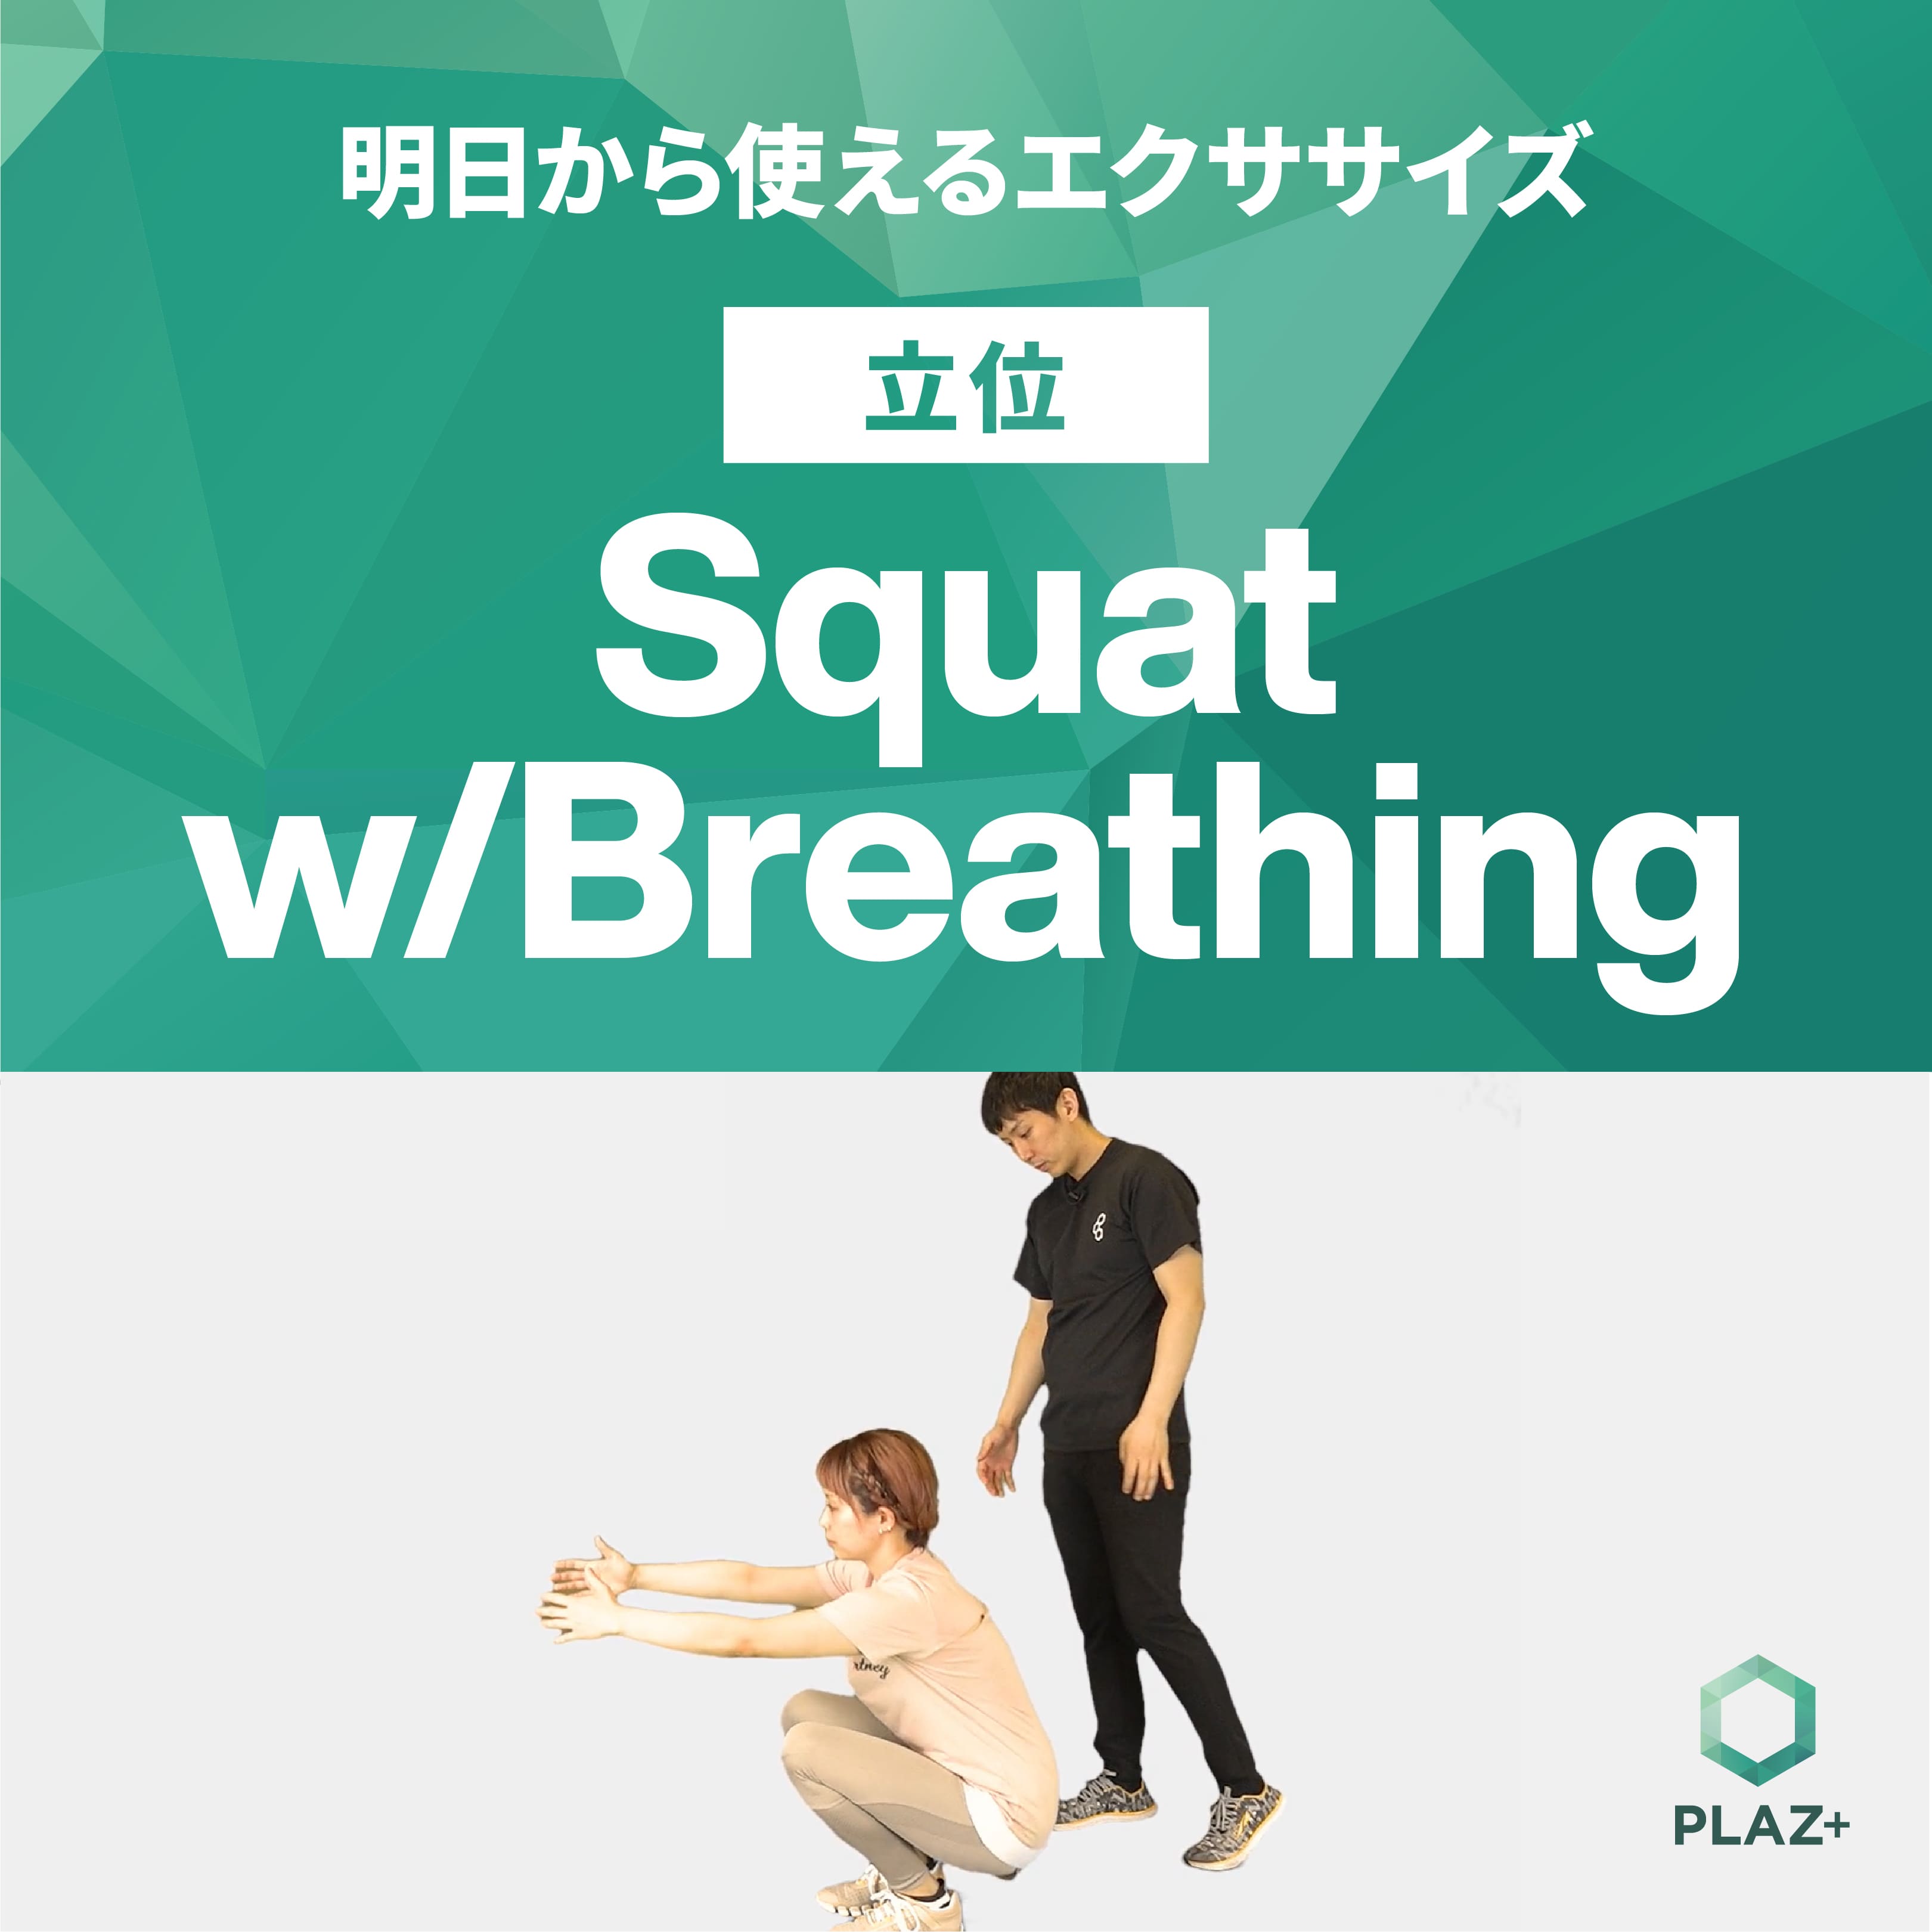 Squat w/Breathing